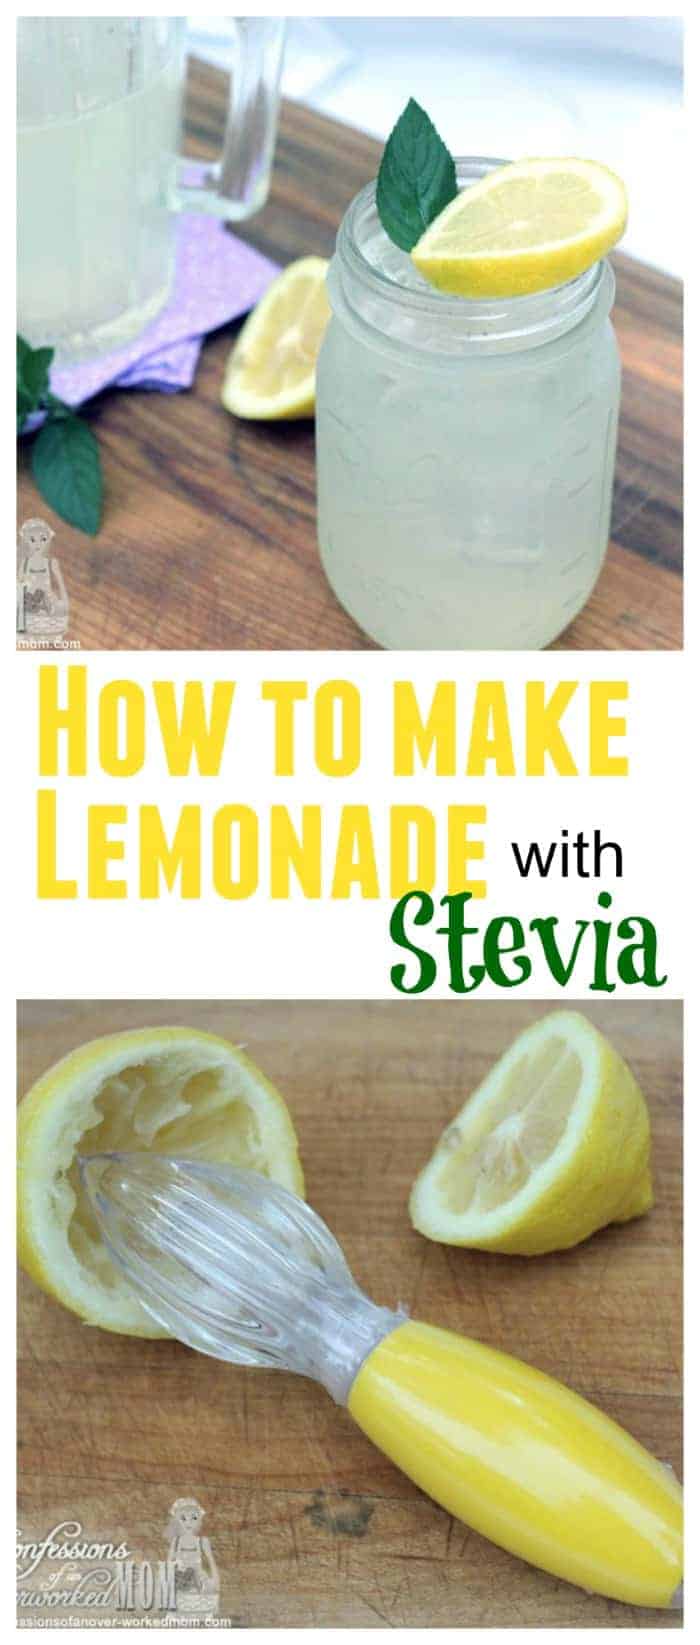 How to make lemonade with stevia